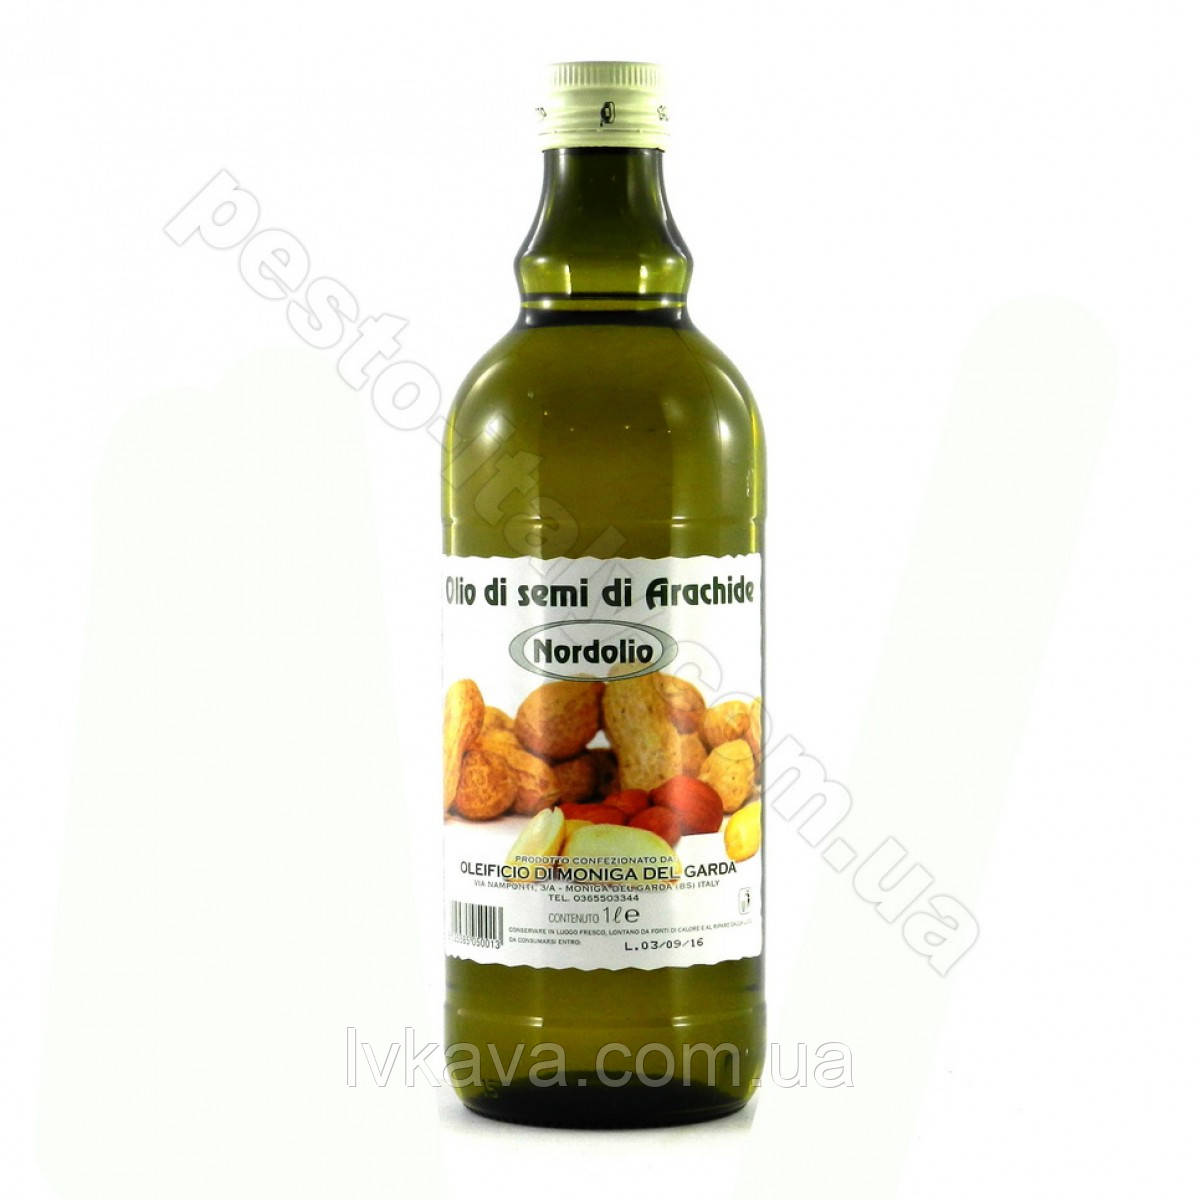 Арахісова олія Olio di semi Arachide Nordolio,1 л.